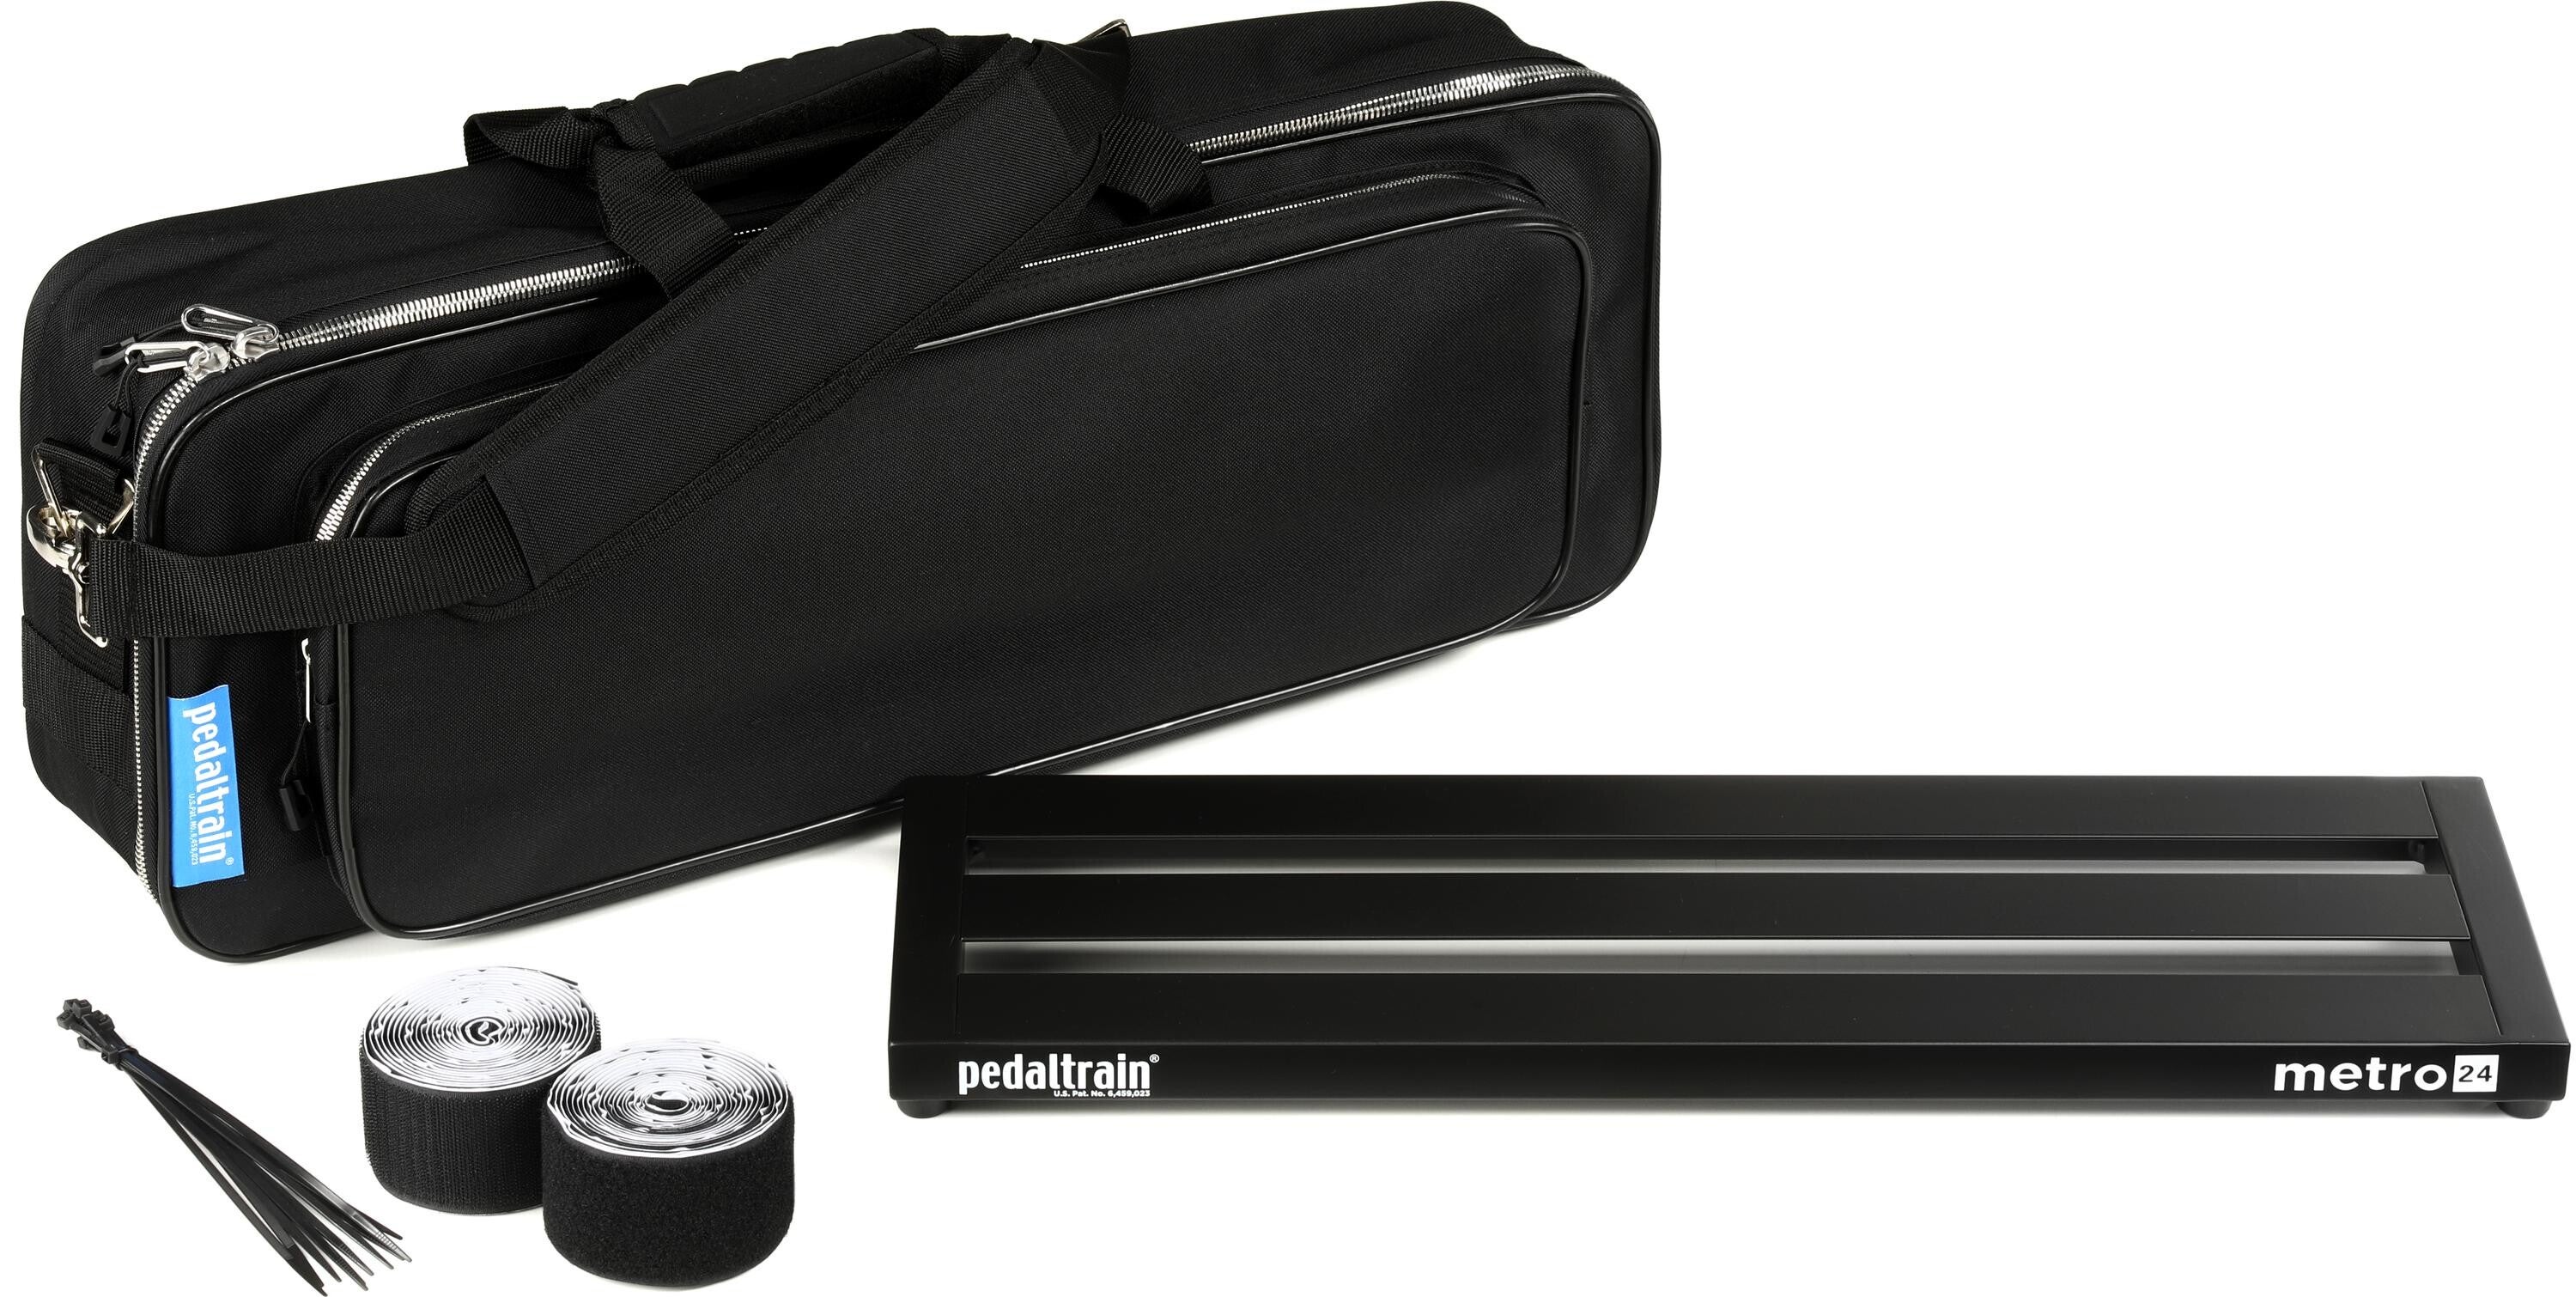 Pedaltrain Metro 24 24-inch x 8-inch Pedalboard with Soft Case 